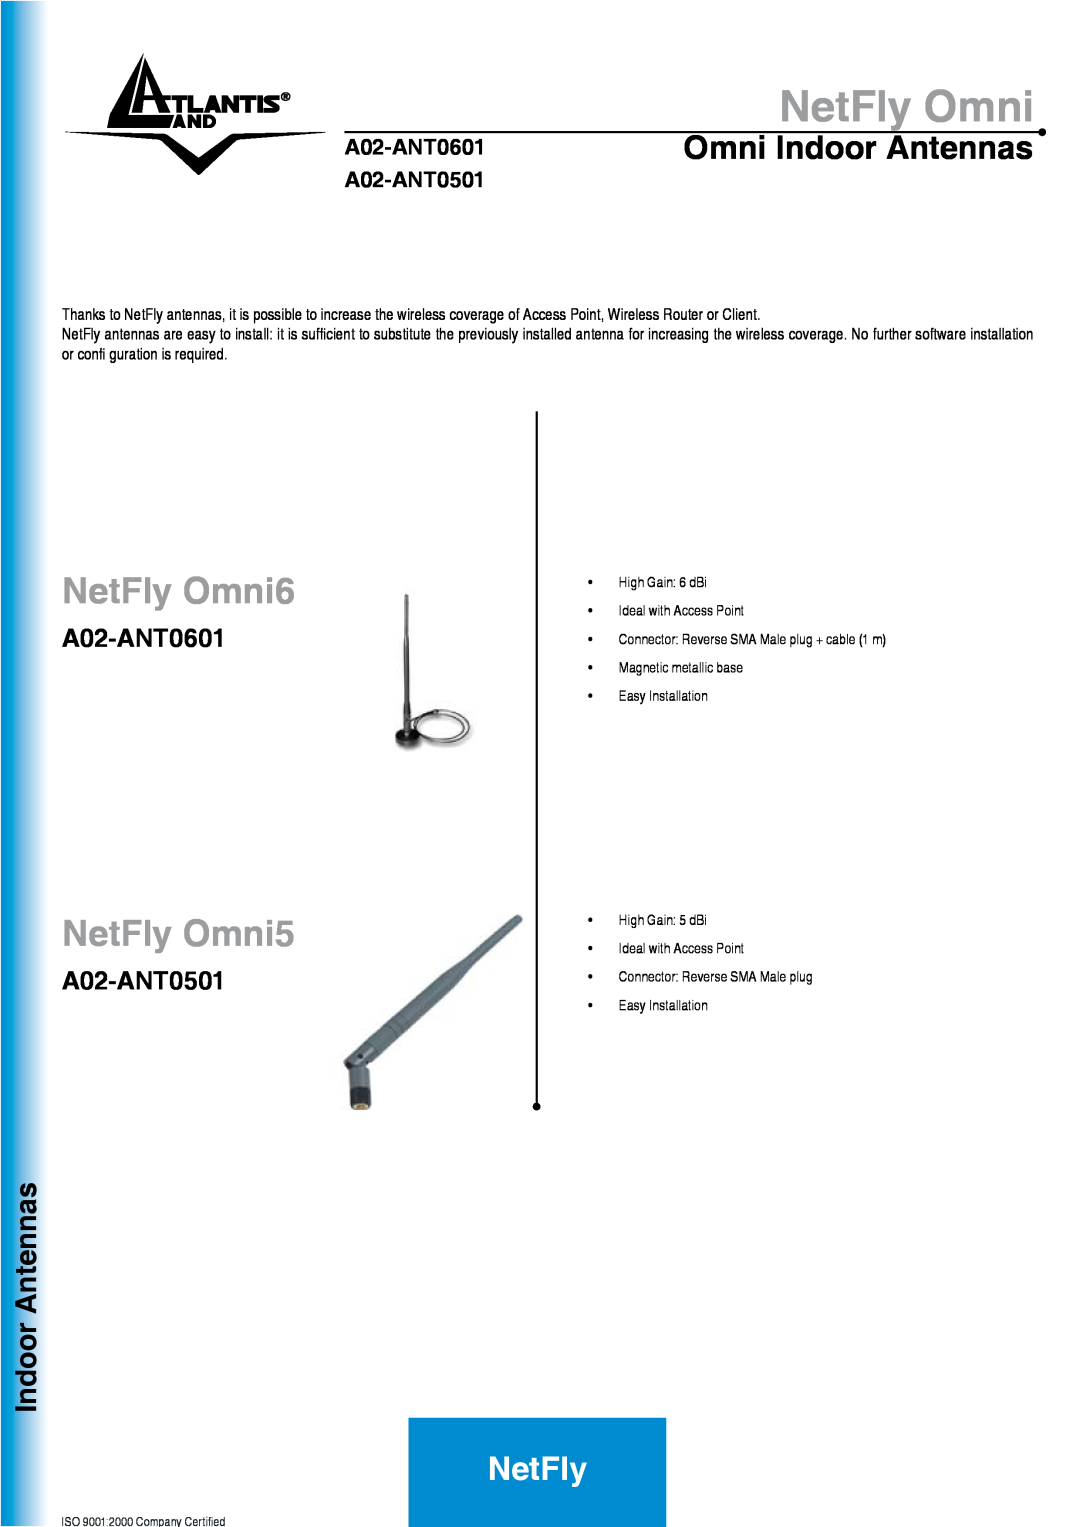 Atlantis Land A02-ANT0501 manual Omni Indoor Antennas, NetFly Omni6, NetFly Omni5, A02-ANT0601 